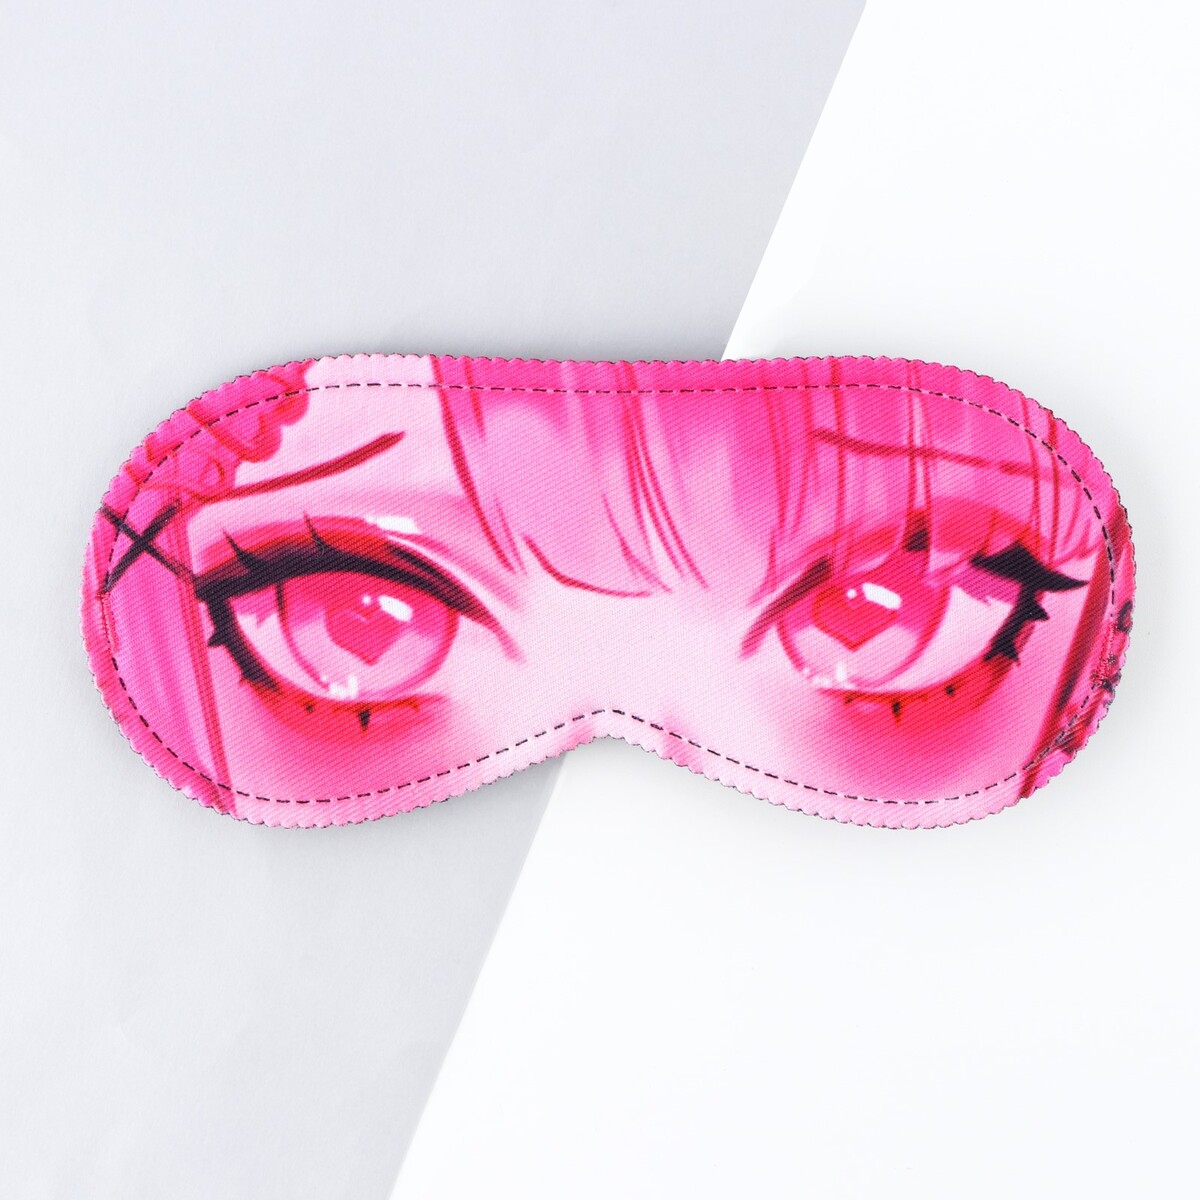 Маска для сна очки для плавания sportex полу маска b31537 4 розовый